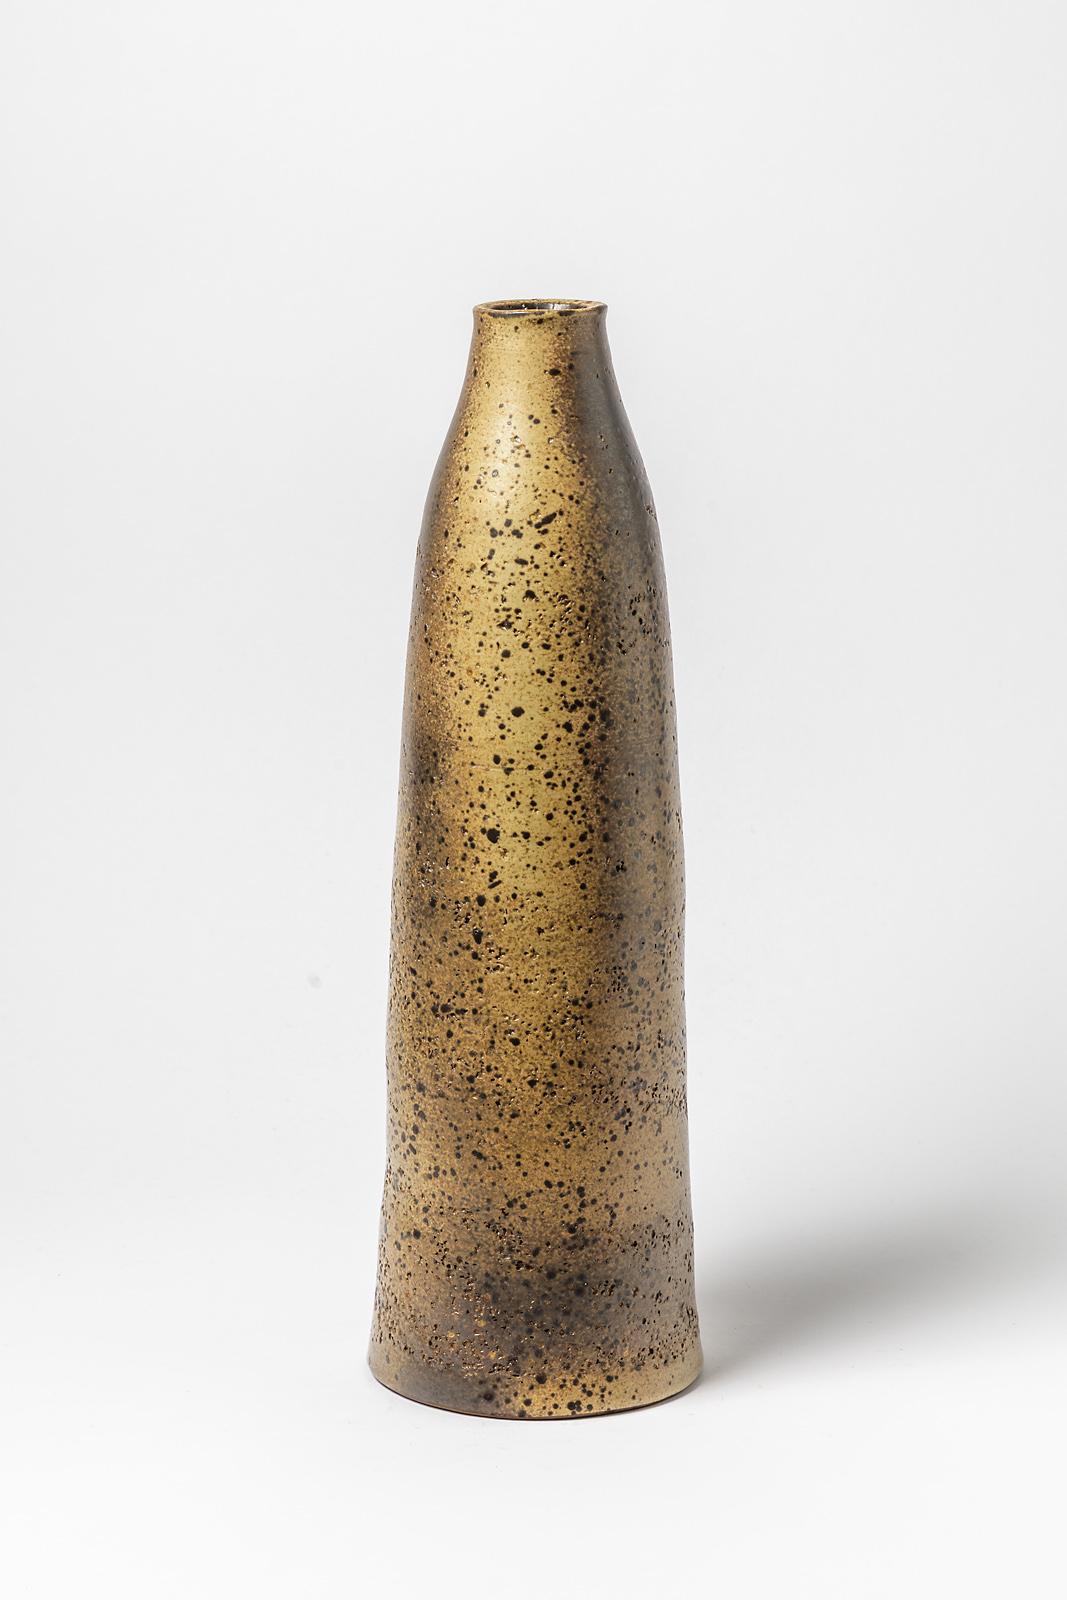 Mid-20th Century Large Stoneware Ceramic Bottle or Vase Signed  For Sale 2